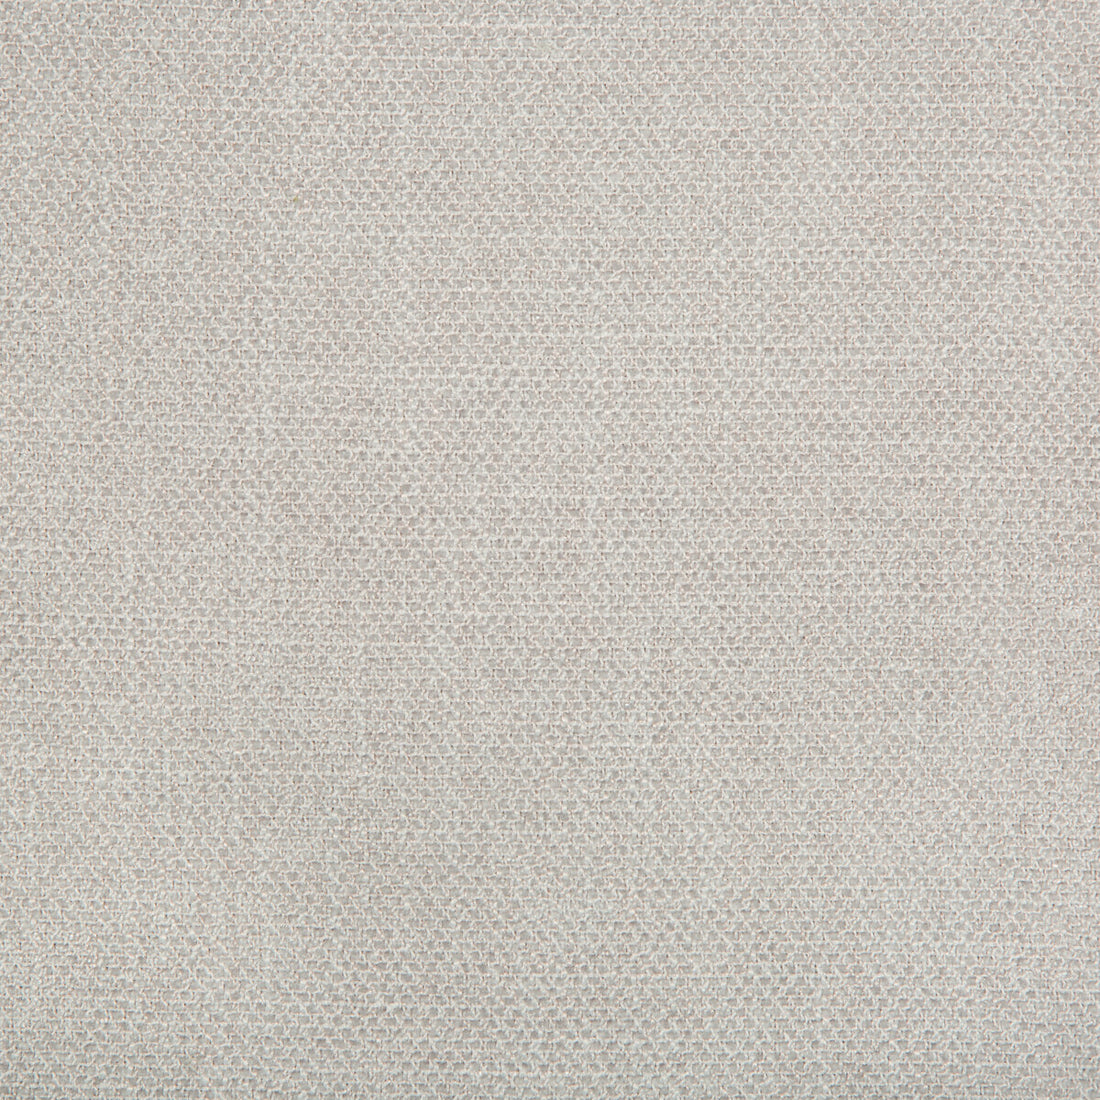 Kf Smt fabric - pattern 35060.110.0 - by Kravet Smart in the Performance Kravetarmor collection